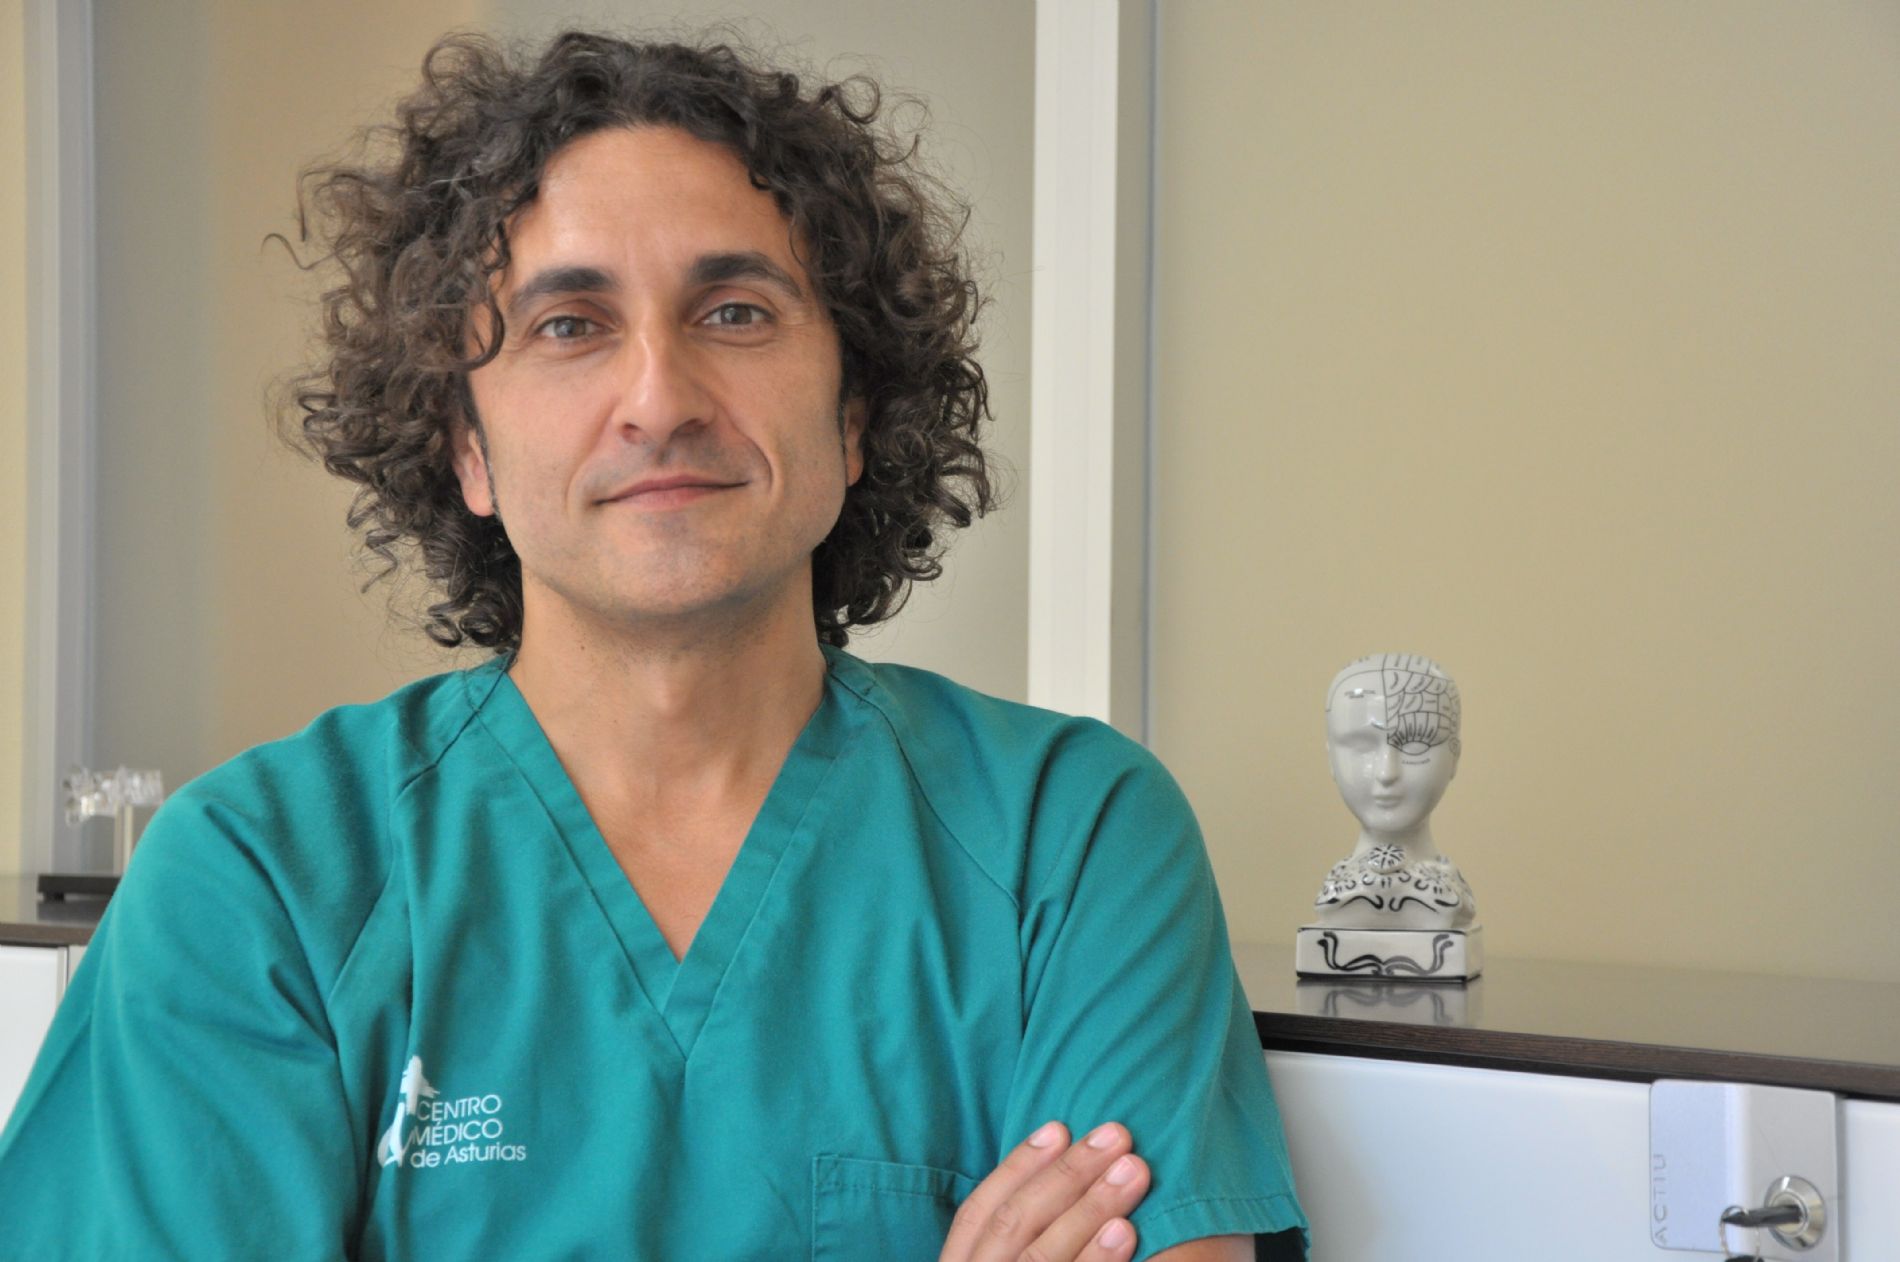 Doctor Marco Antonio lvarez-Vega